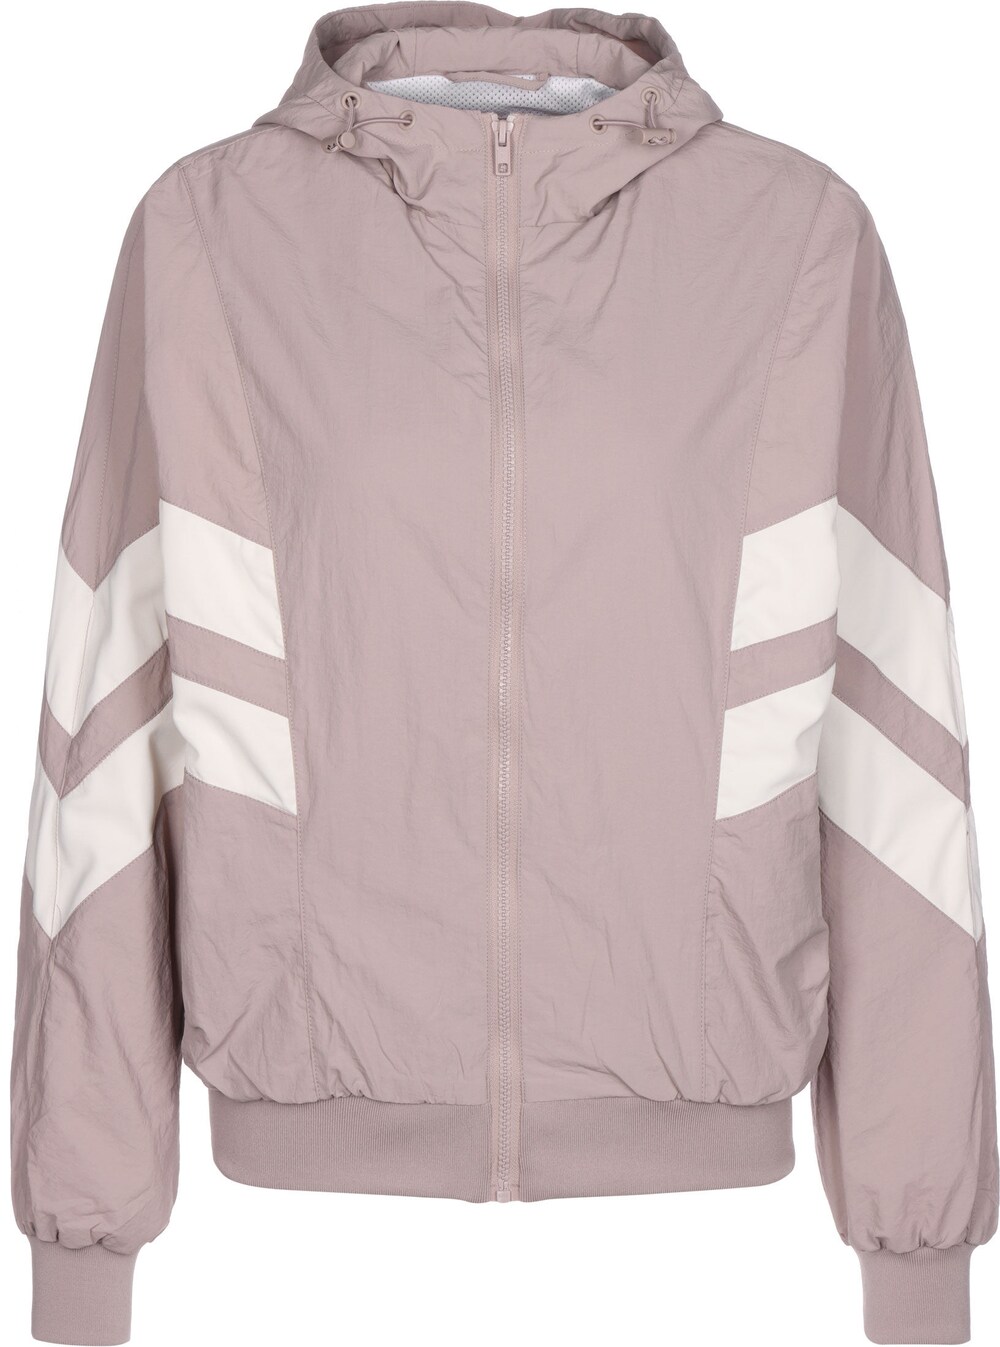 Межсезонная куртка Urban Classics Crinkle Batwing, розовый куртка urban classics crinkle batwing оранжевый